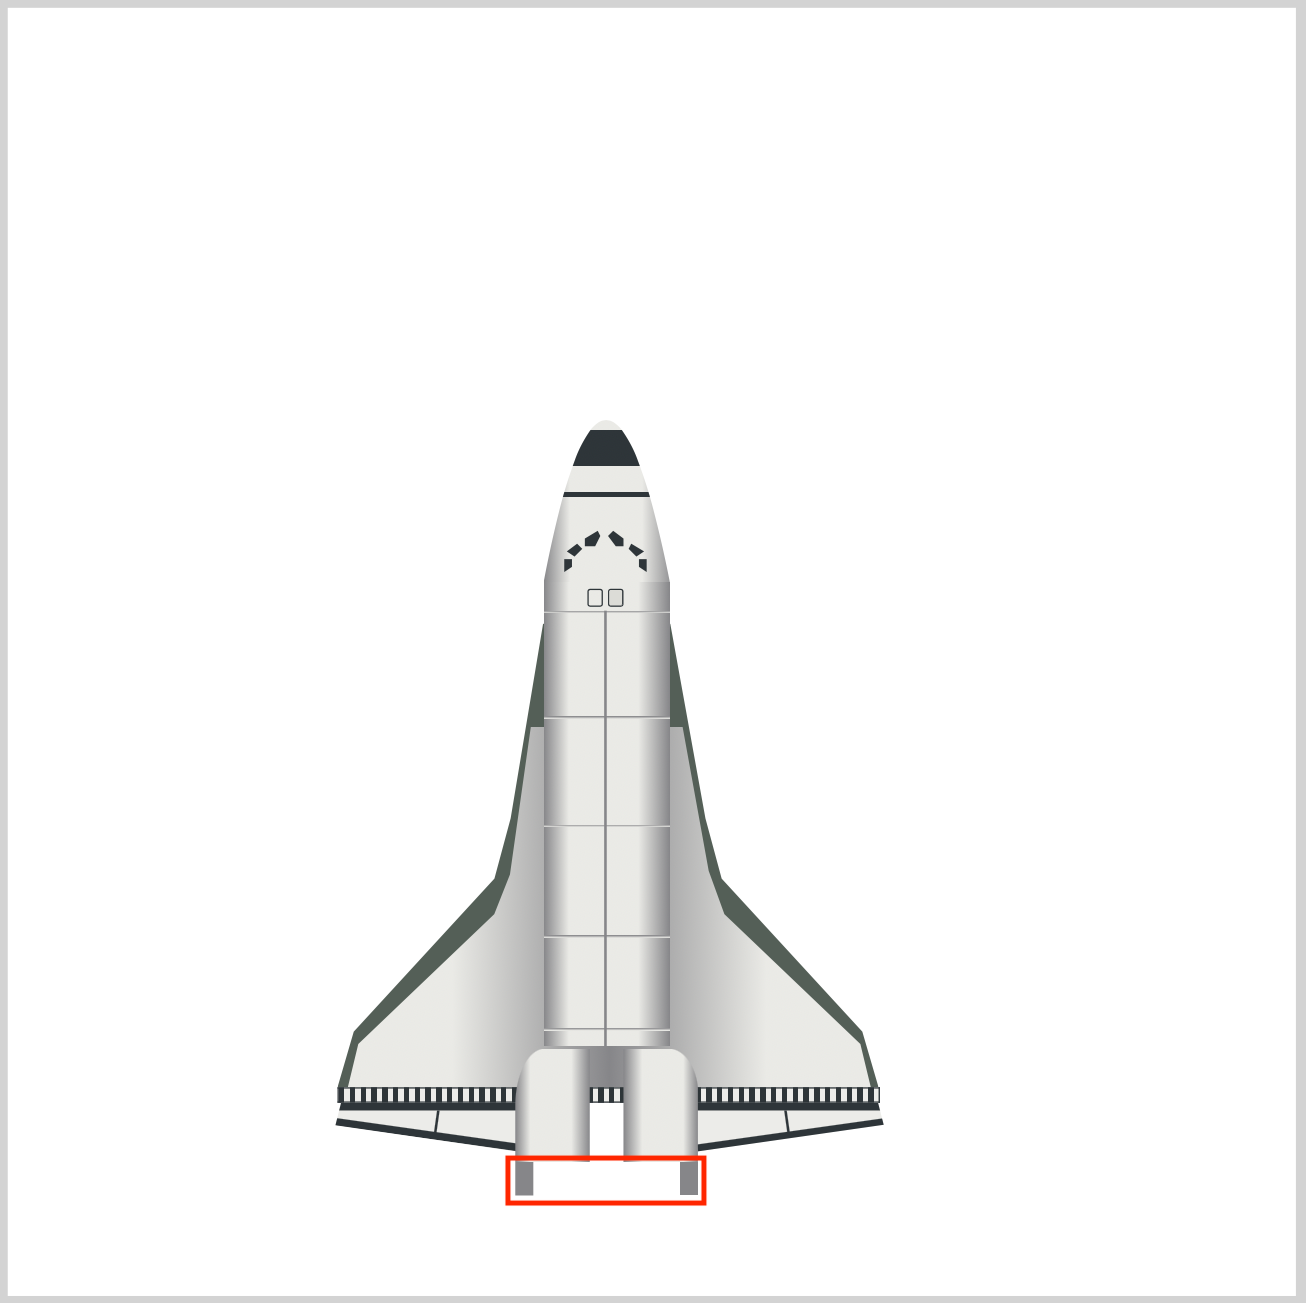 Space Shuttle Orbiter - Aft Fuselage Block